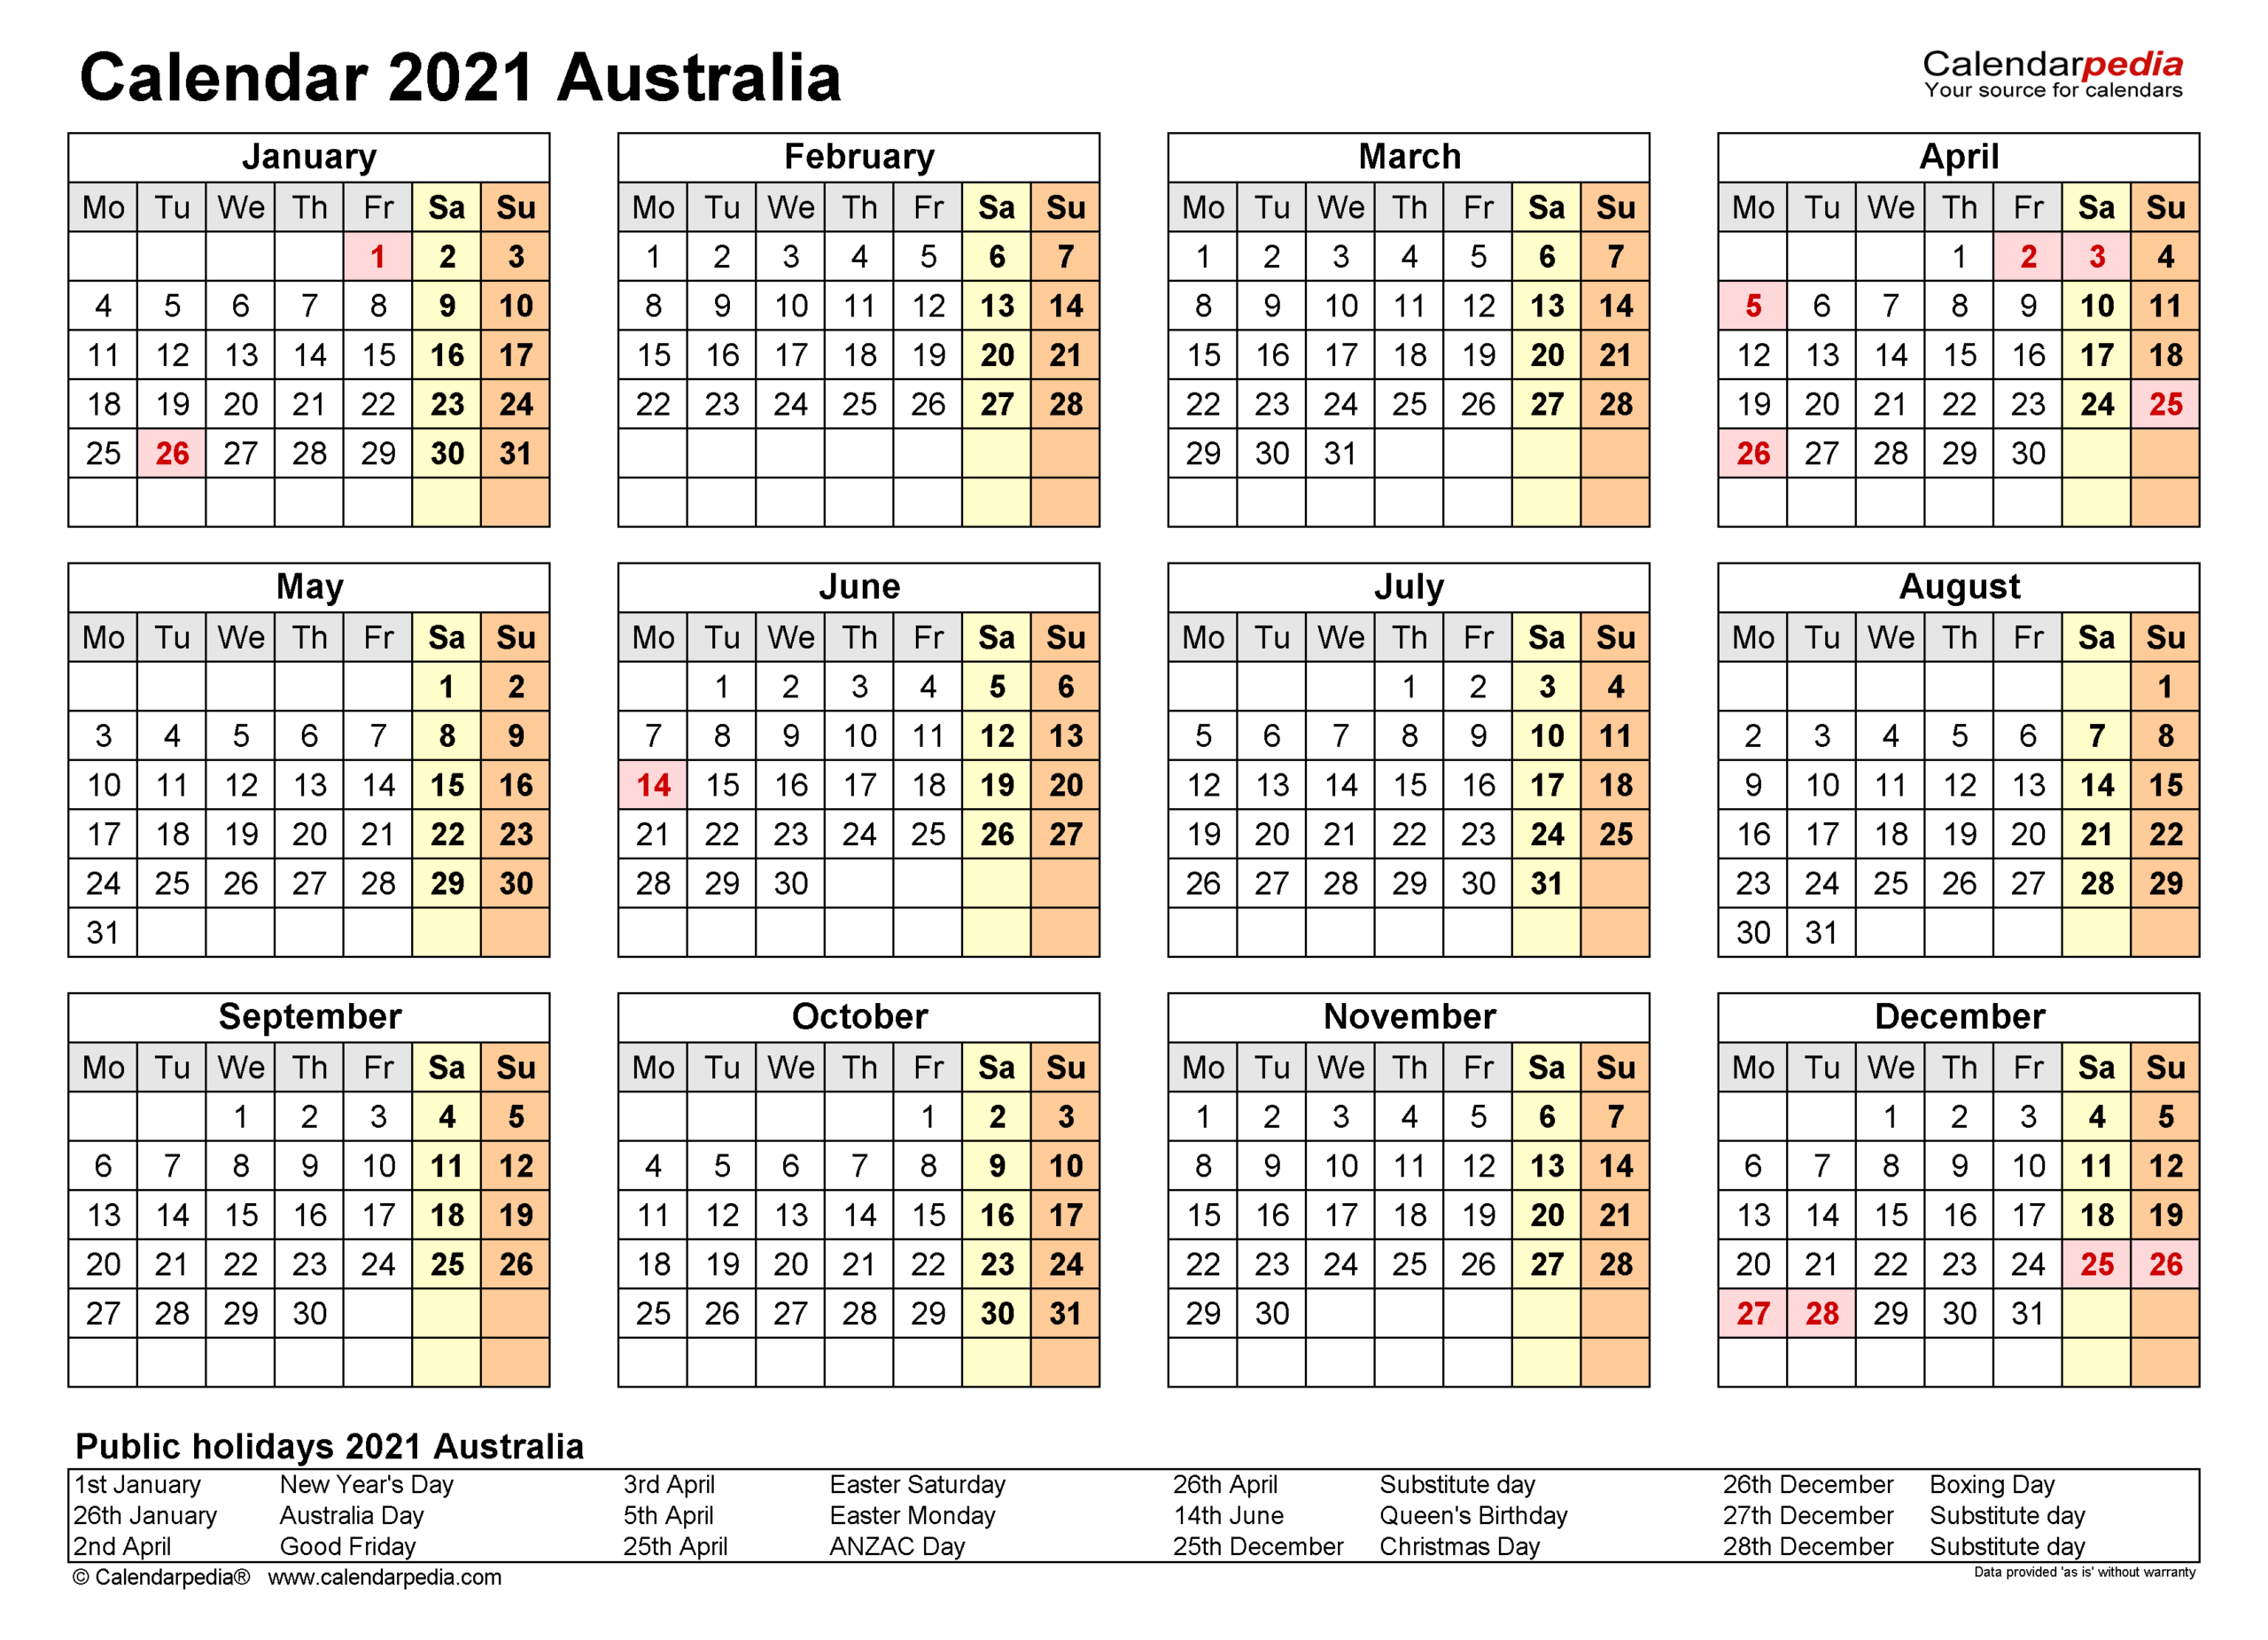 2022 School Calendar Queensland - Nexta-Qld School Holidays Calendar 2022